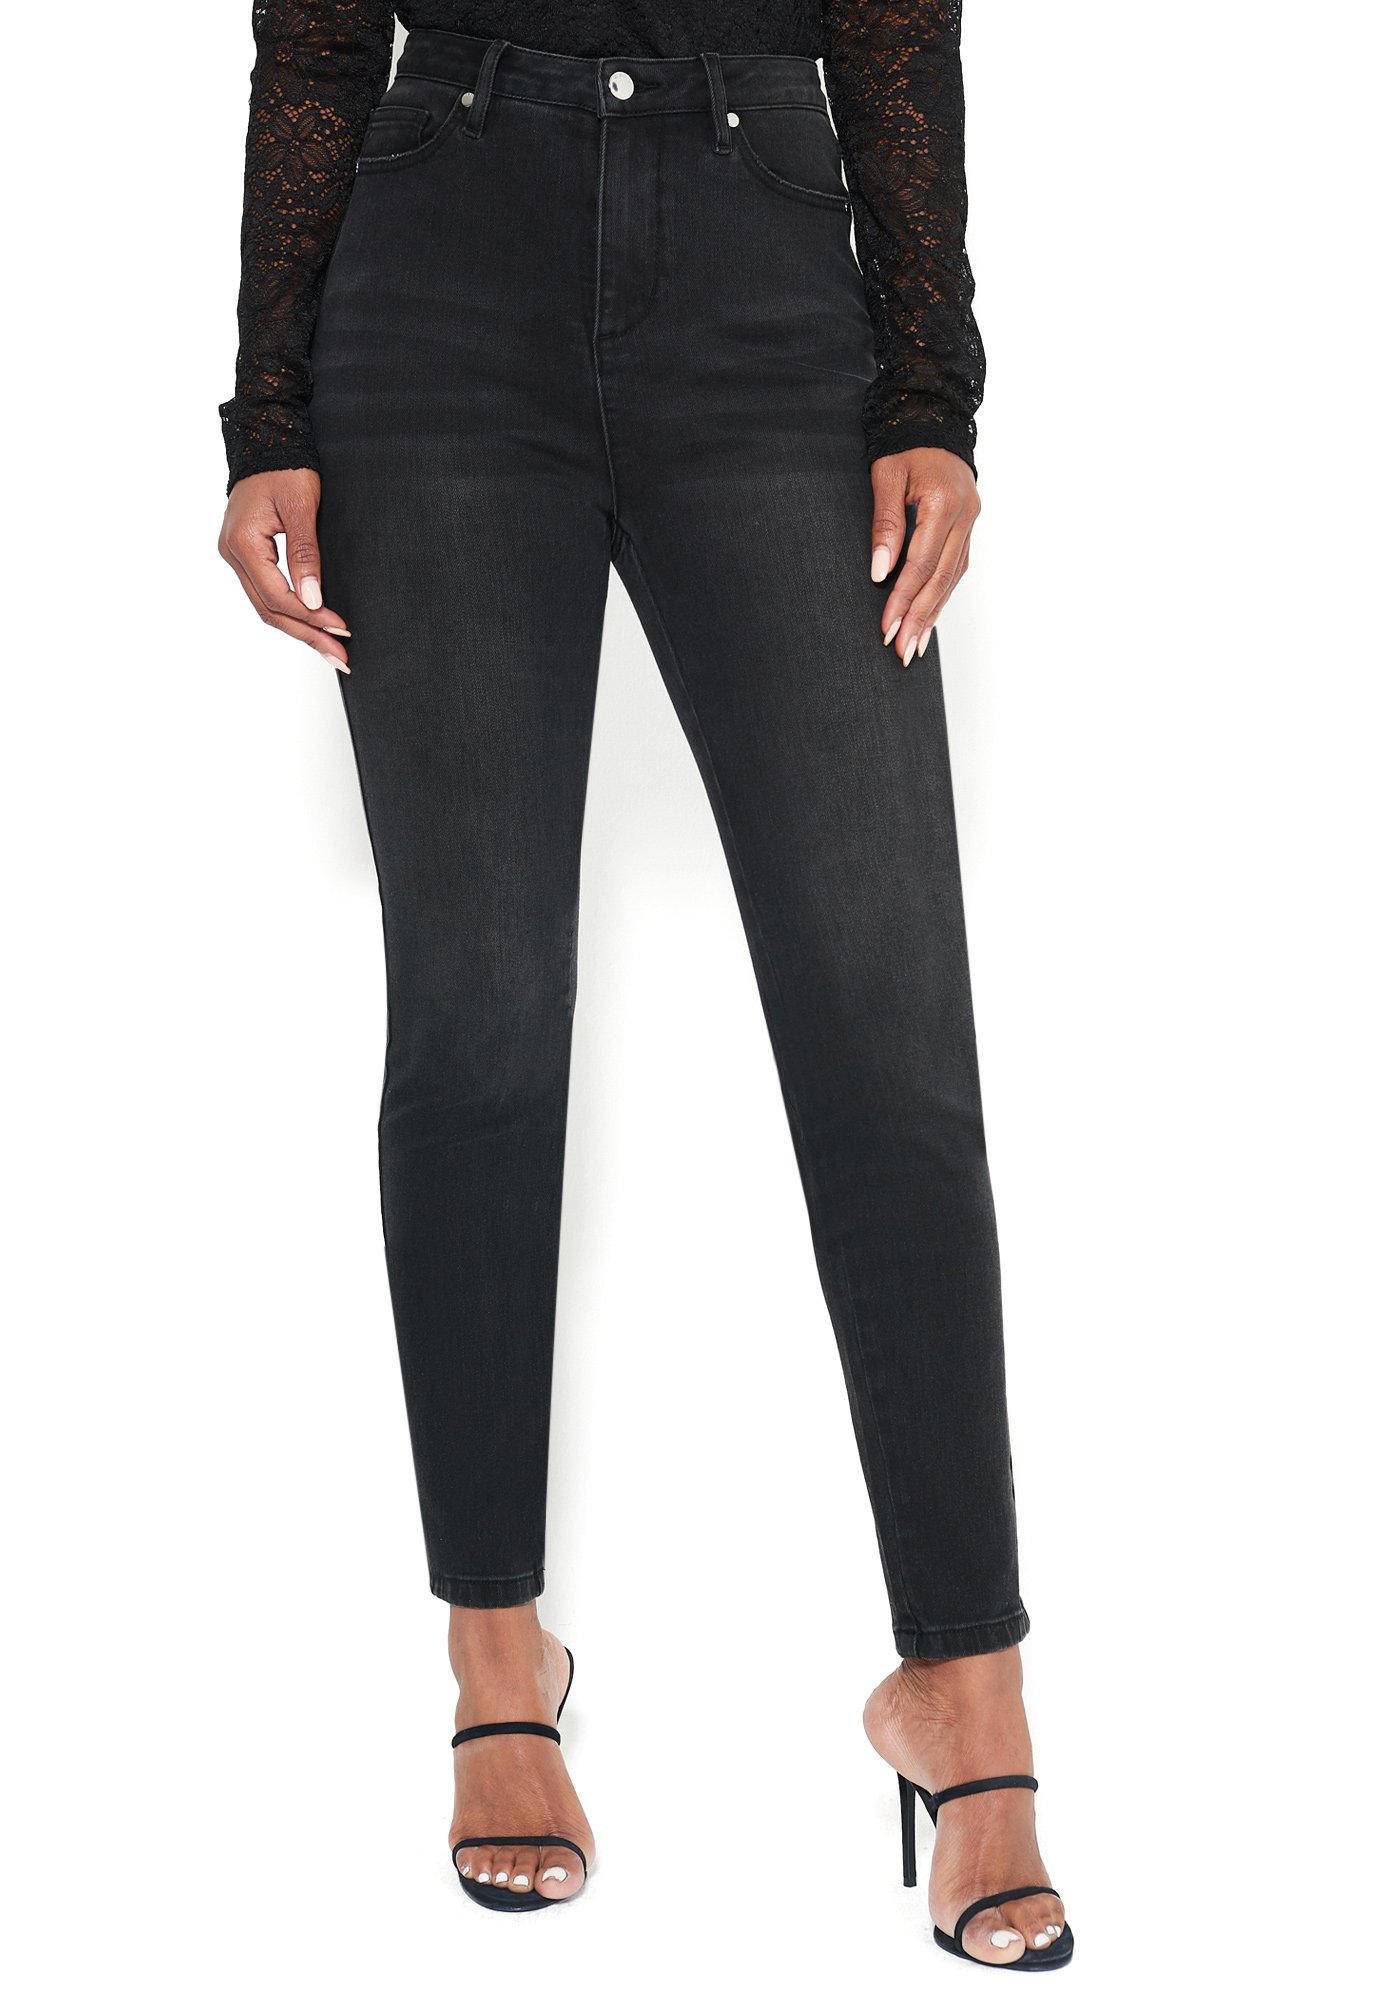 Bebe Women's High Waist Skinny Jeans, Size 28 in Black Cotton/Spandex